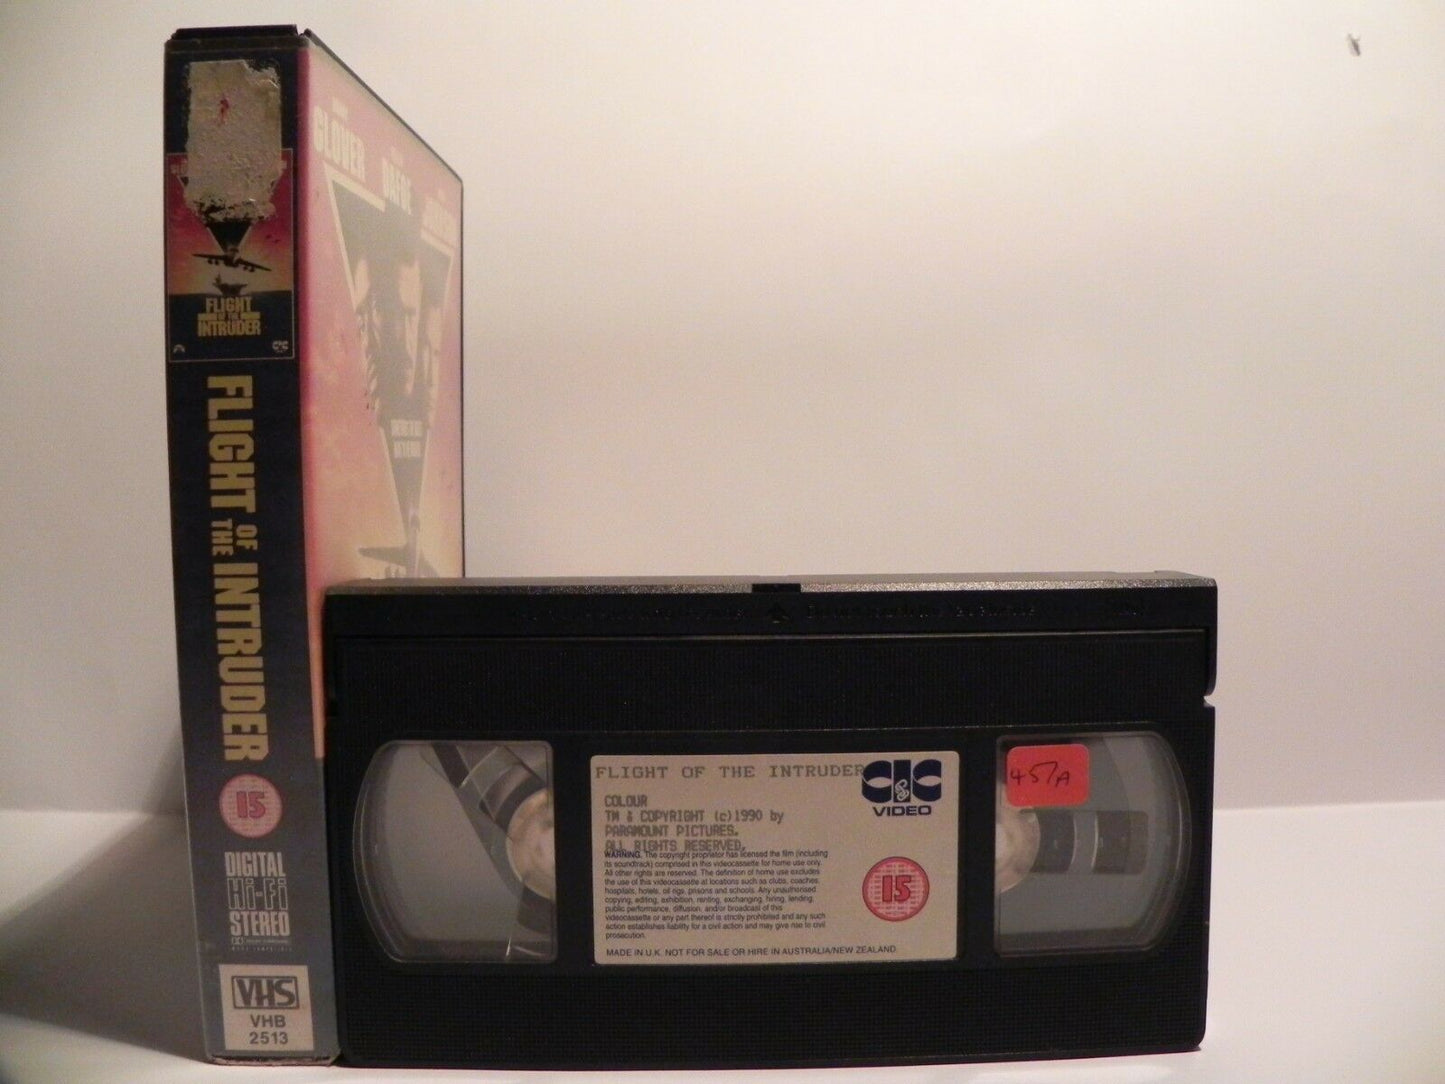 Flight Of The Intruder: (1991) War Action [Vietnam S.Coonts] - Danny Glover VHS-